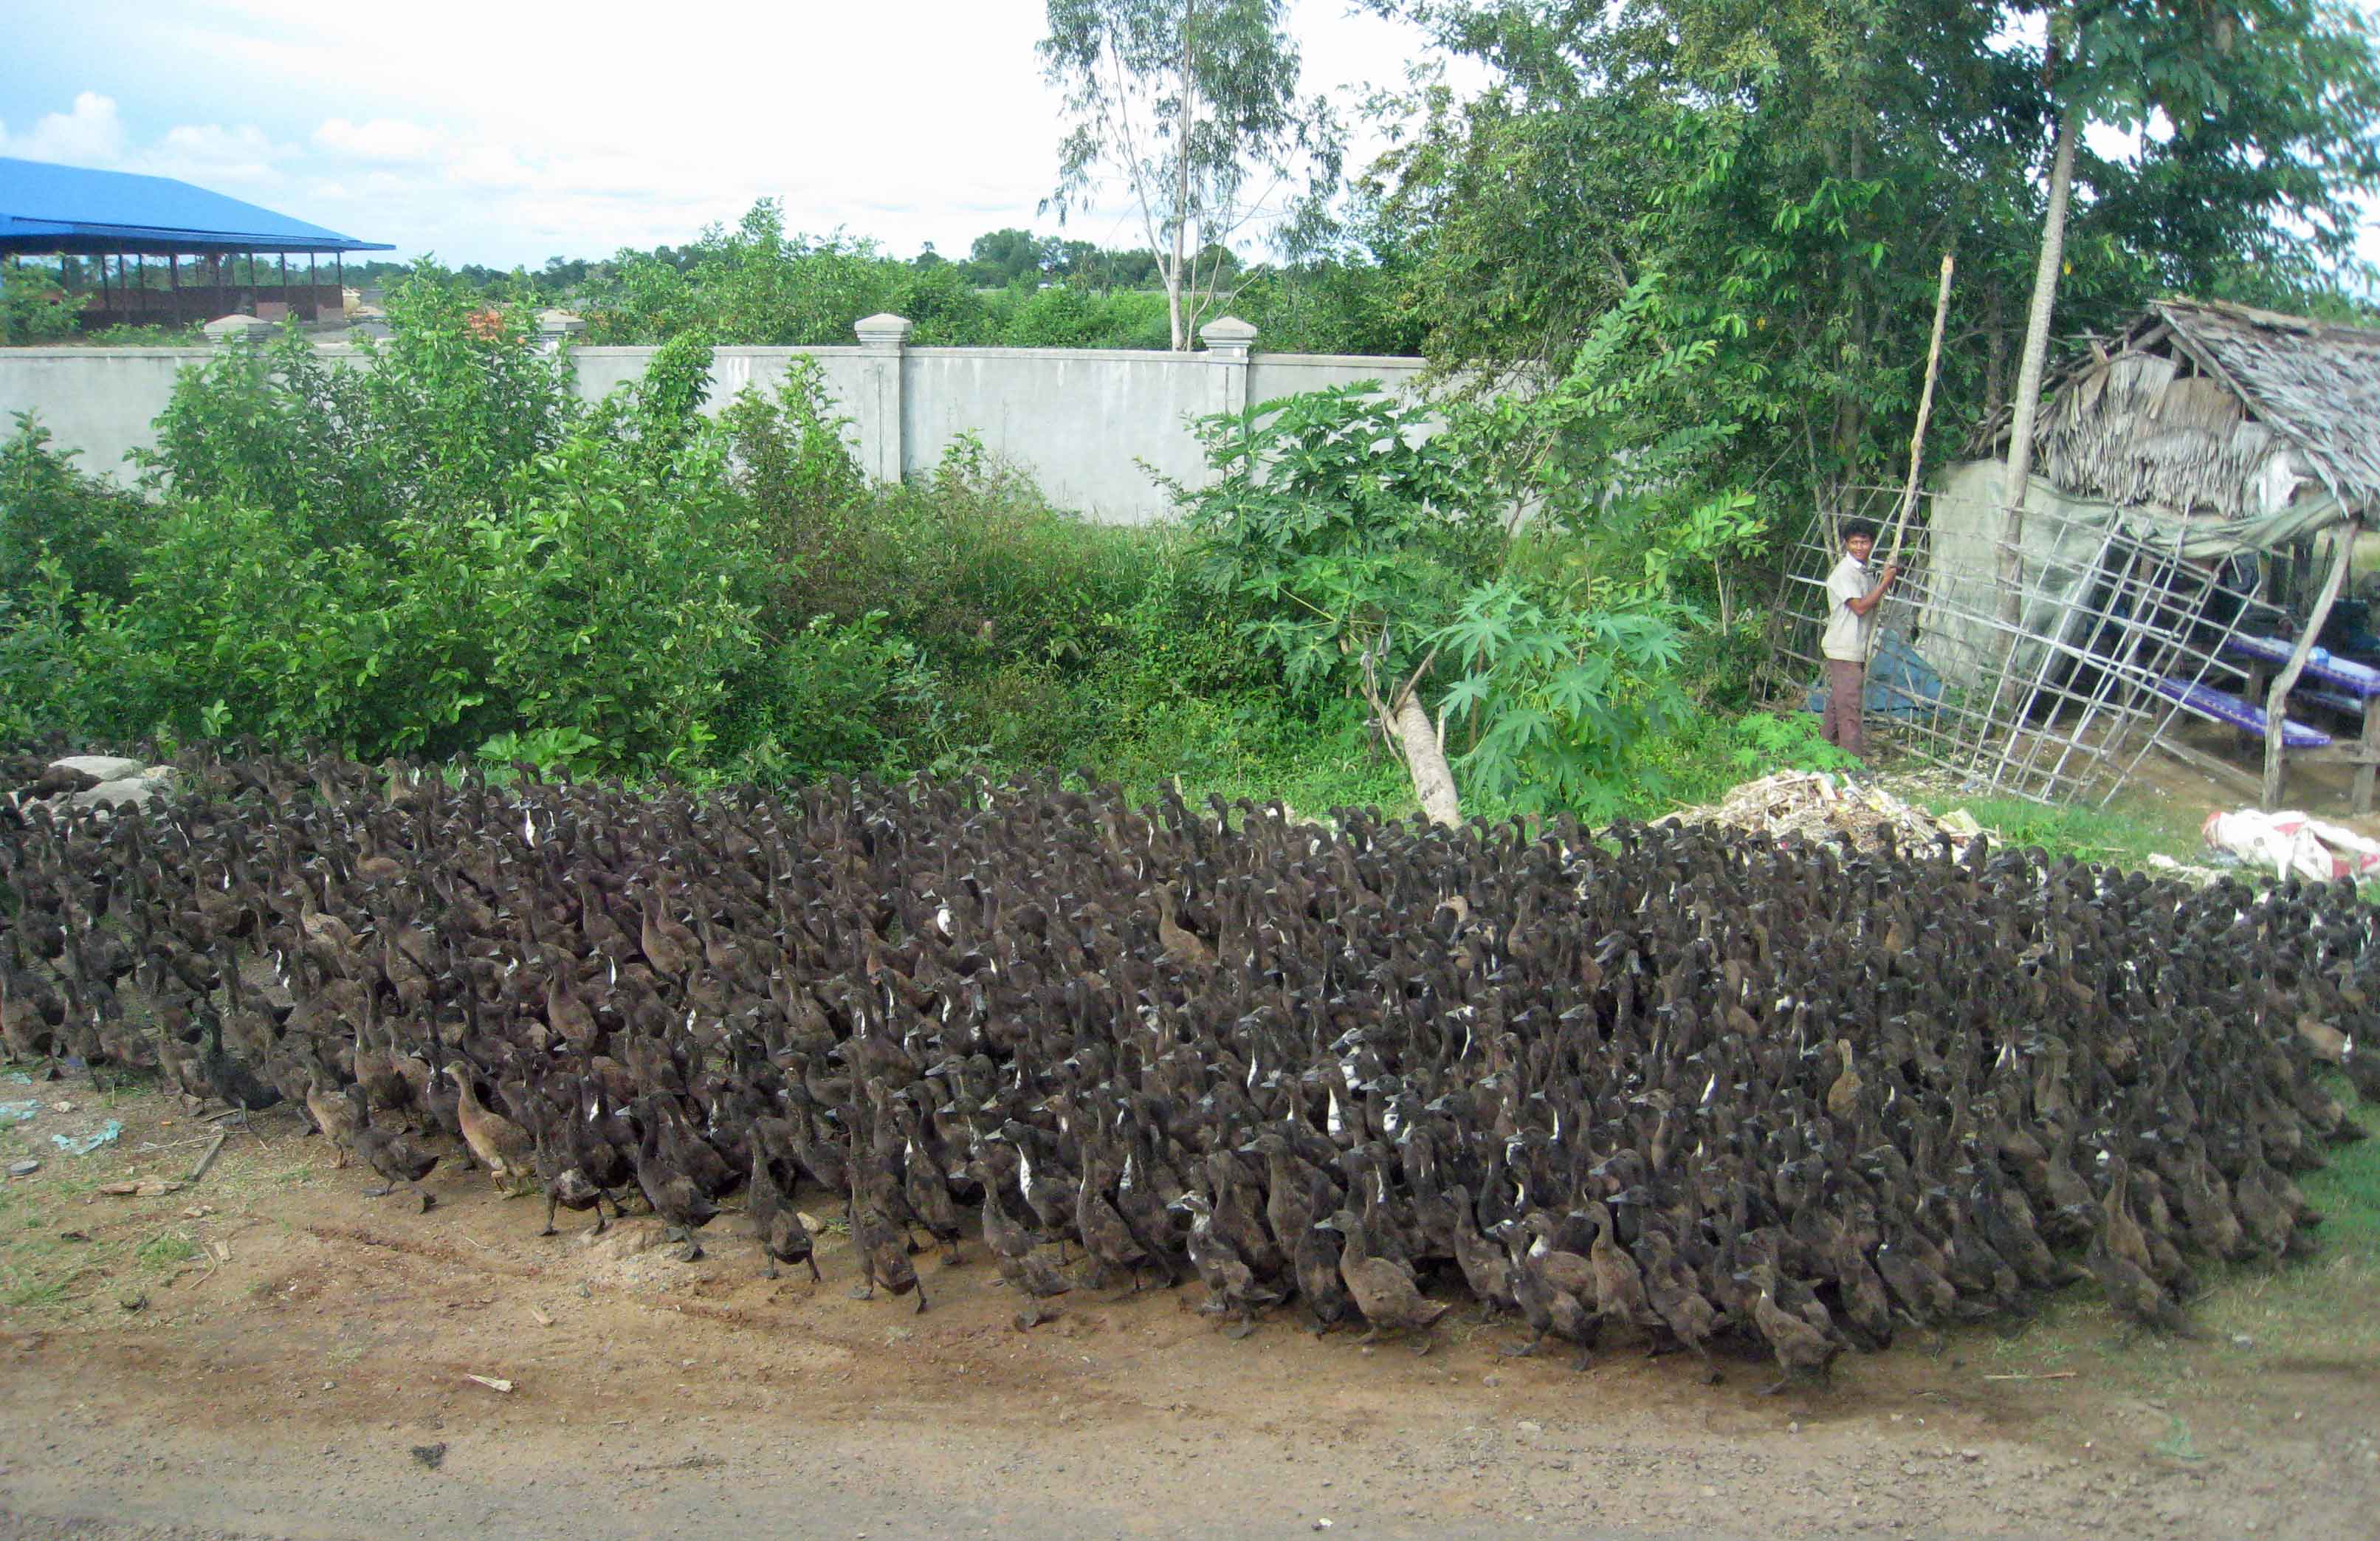 Herd-of-Ducks-Rural Countryside the Province of Battambang